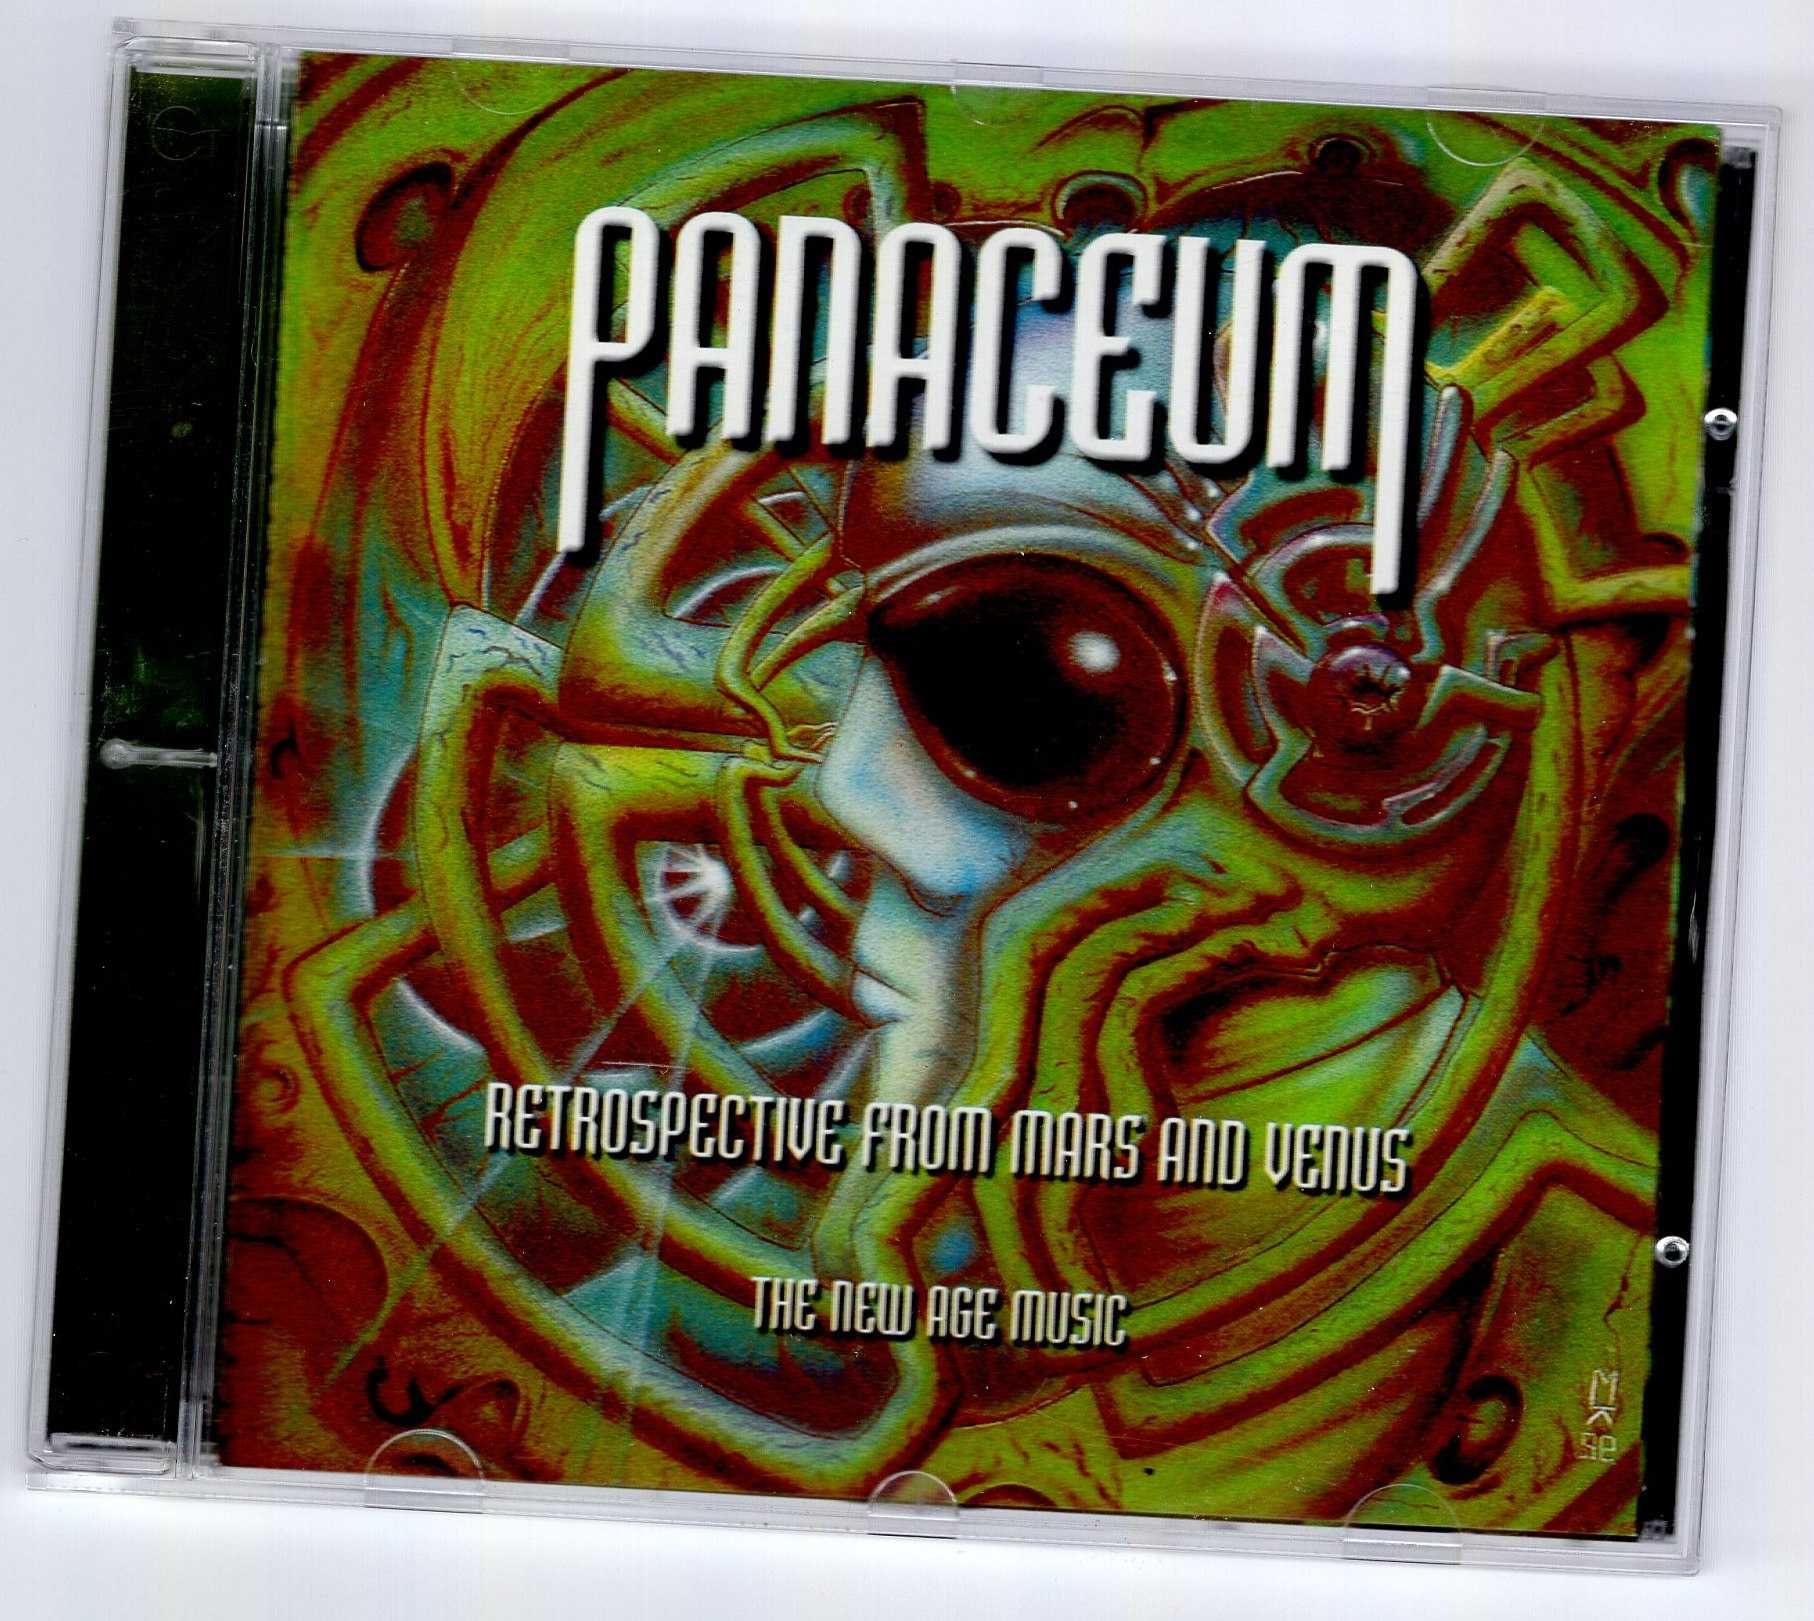 Panaceum - Retrospective From Mars And Venus (CD)